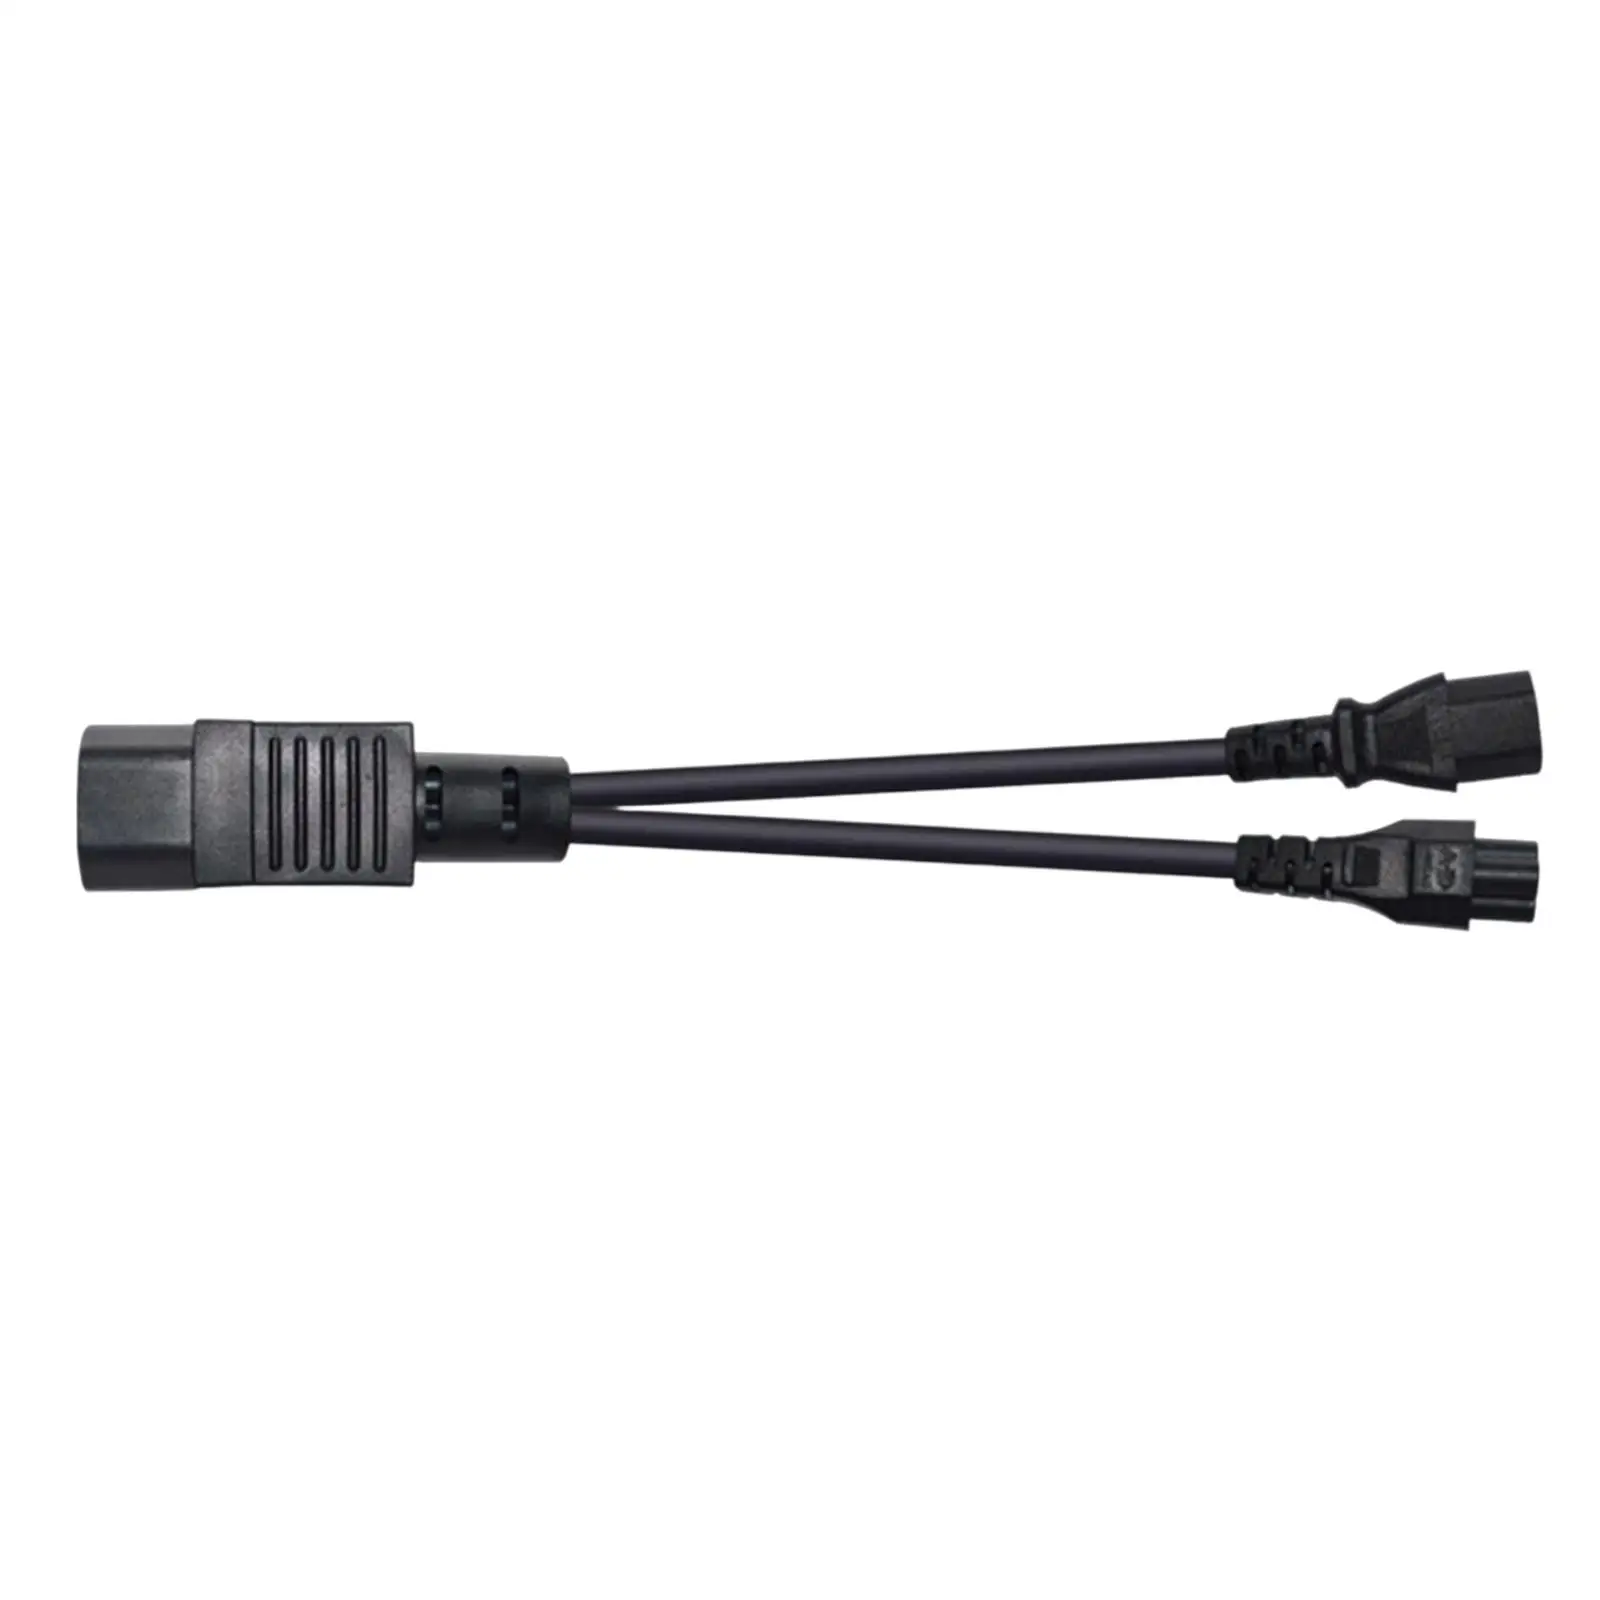 IEC320 C14 to IEC320 C13+C5 Y Splitter Power Y Type Power Adapter Cord Splitter for PC